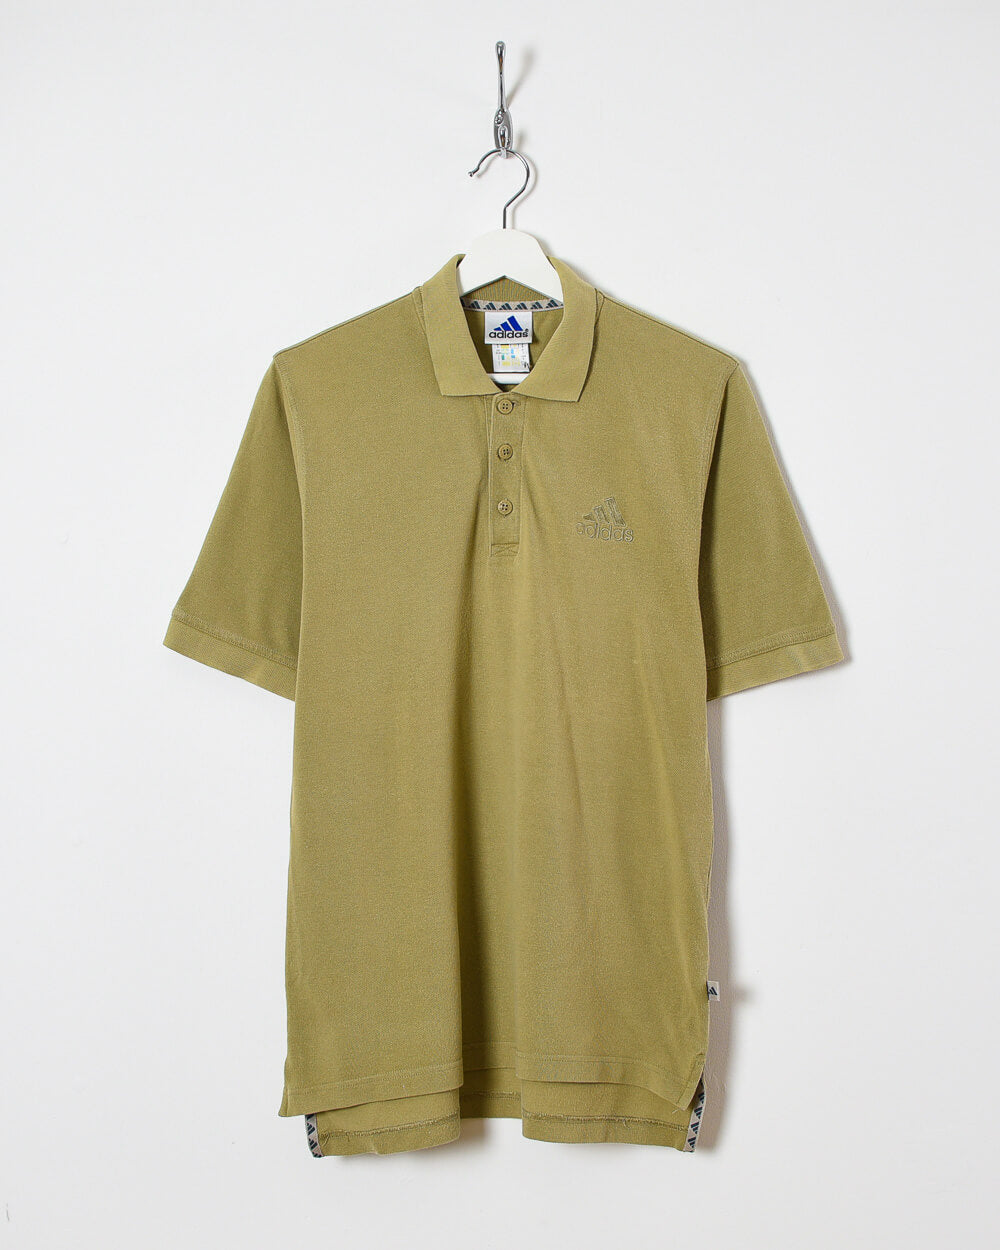 Adidas Polo Shirt - Medium - Domno Vintage 90s, 80s, 00s Retro and Vintage Clothing 